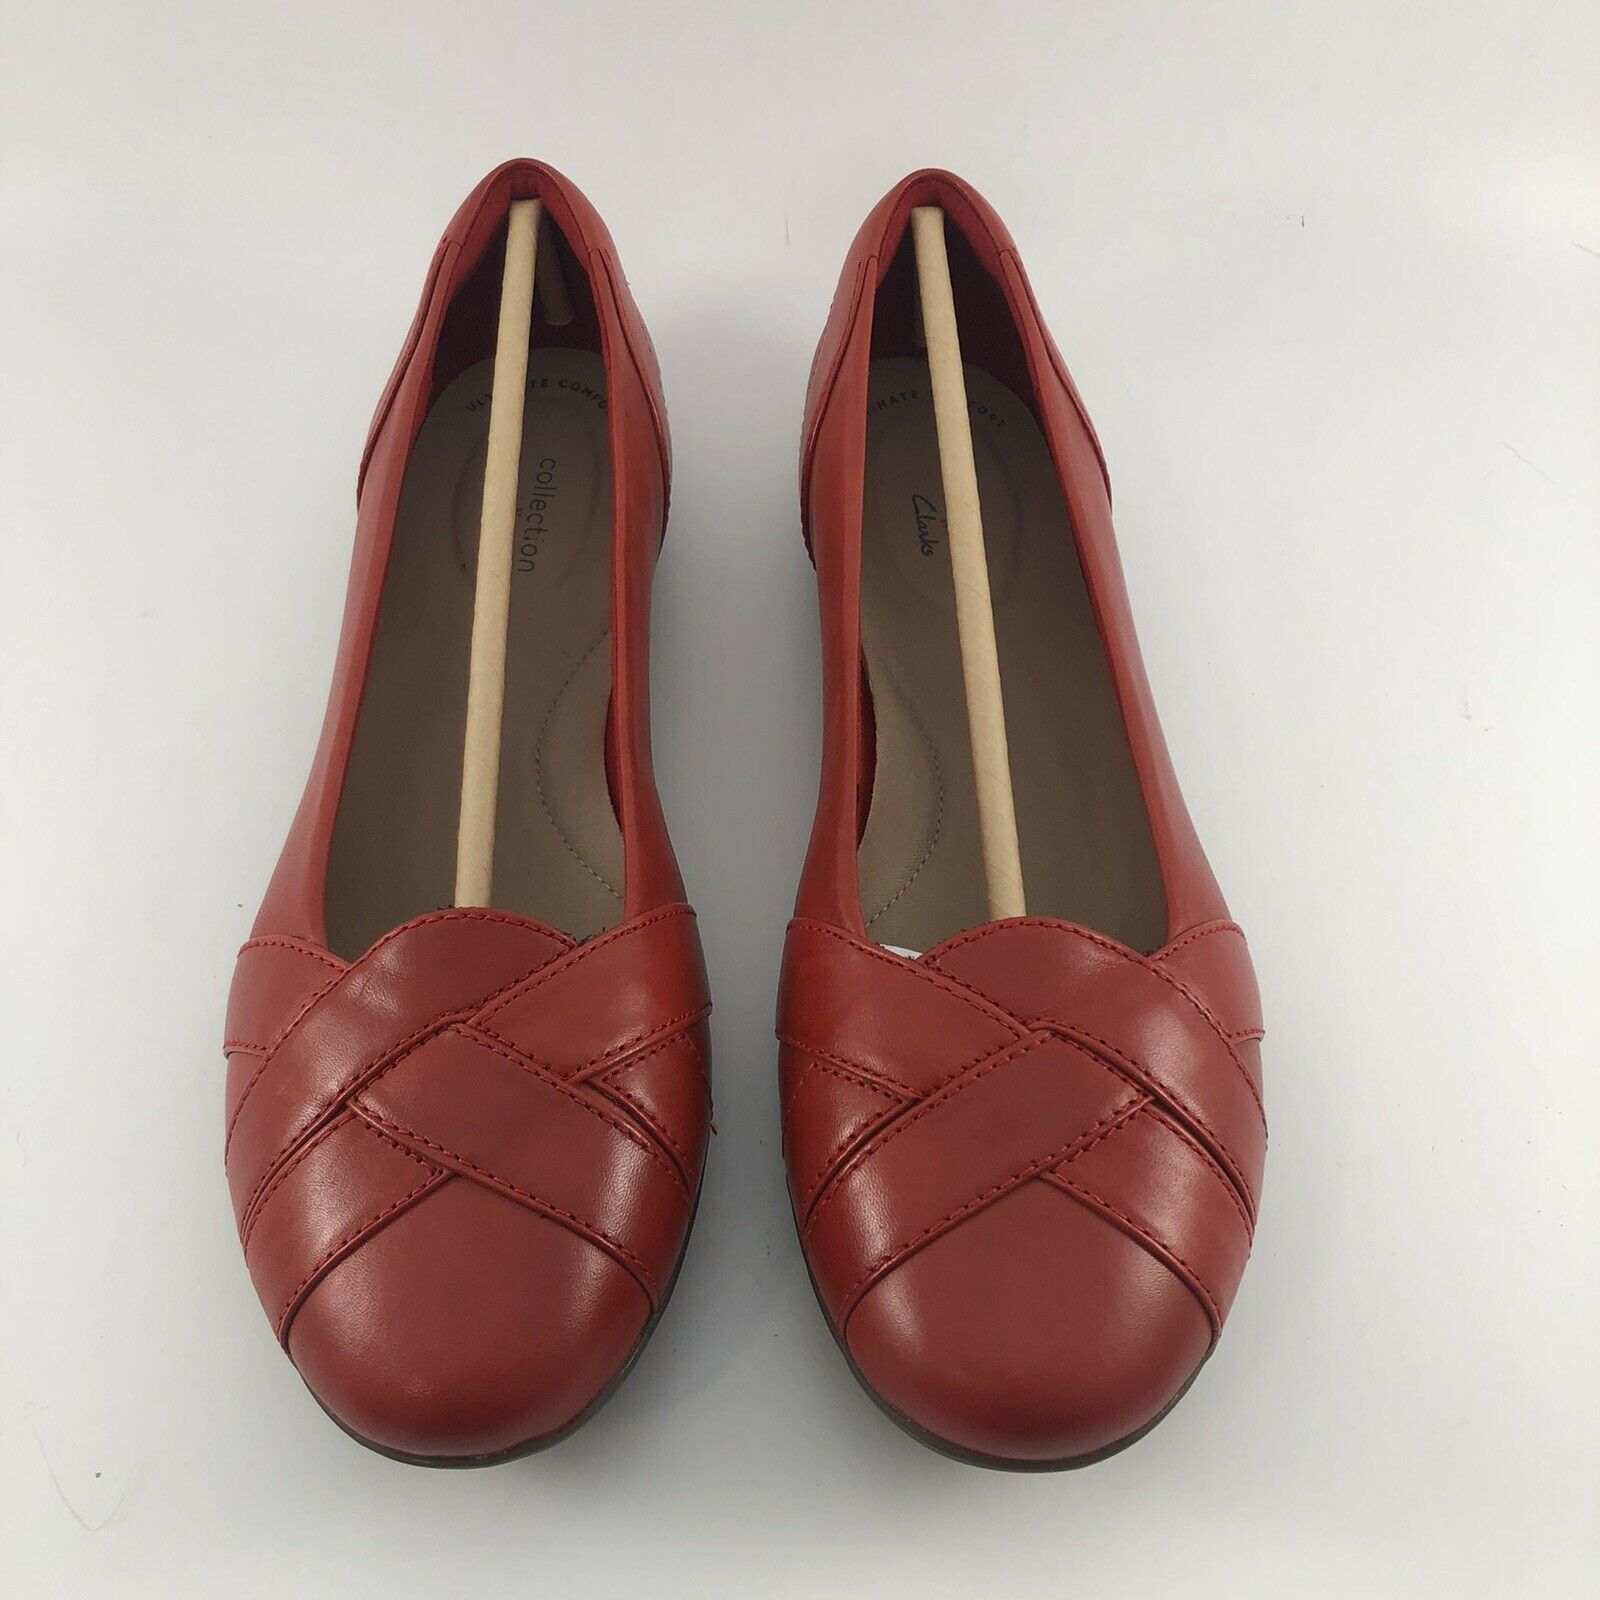 Clarks Gracelin Mia Women's Red Leather Ballet Casual Flat Shoes - Size 9.5 M